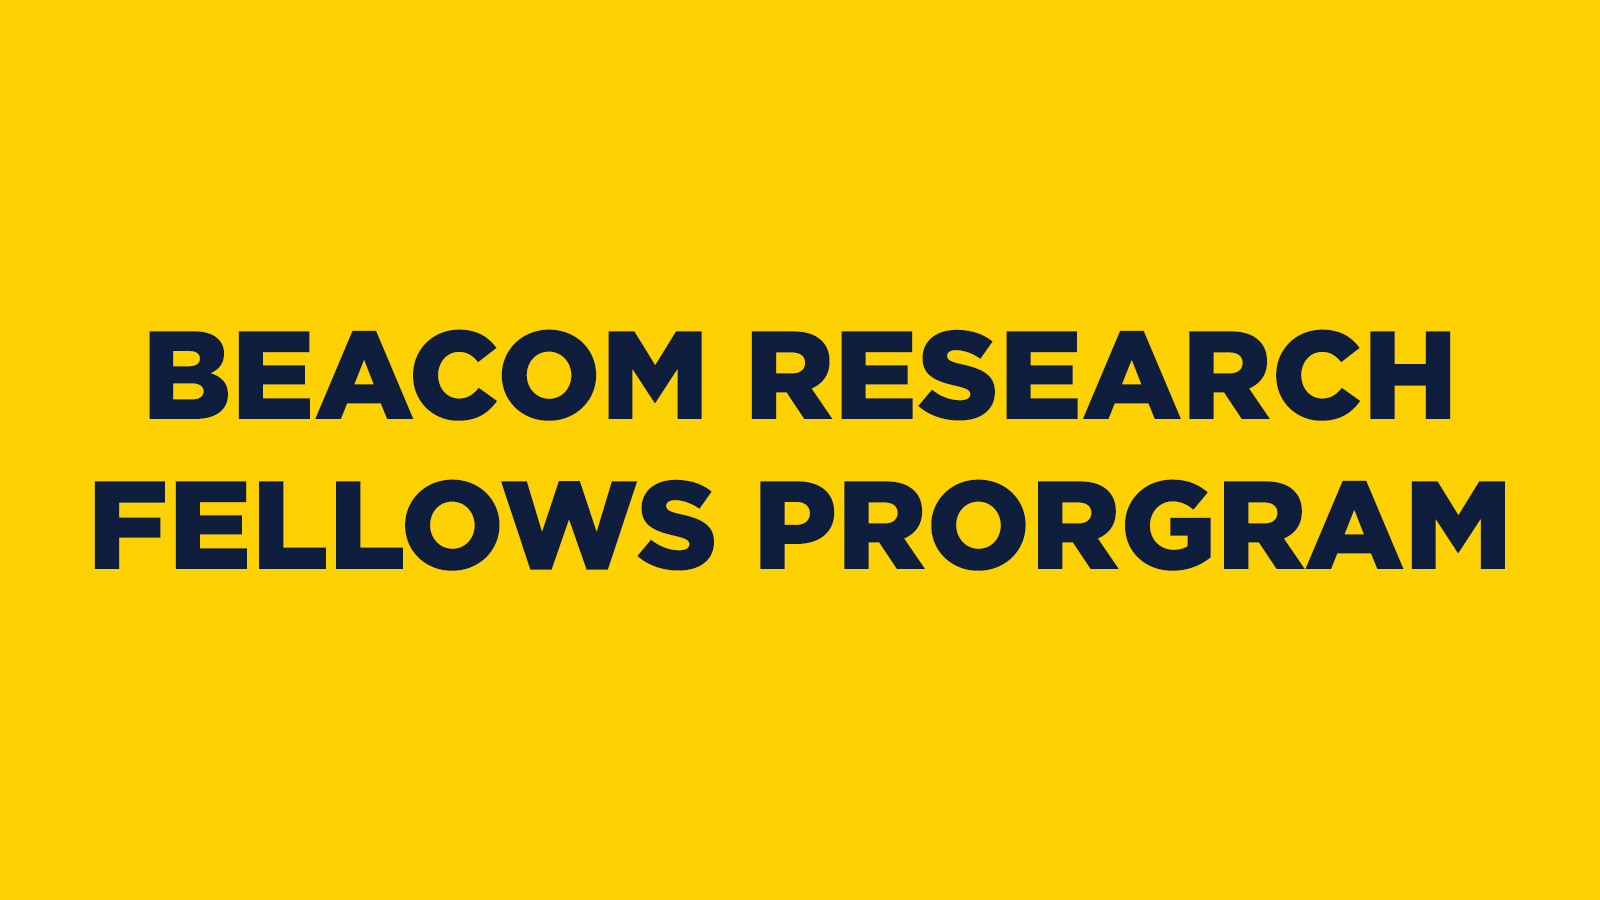 Beacom Reseach Fellows Program